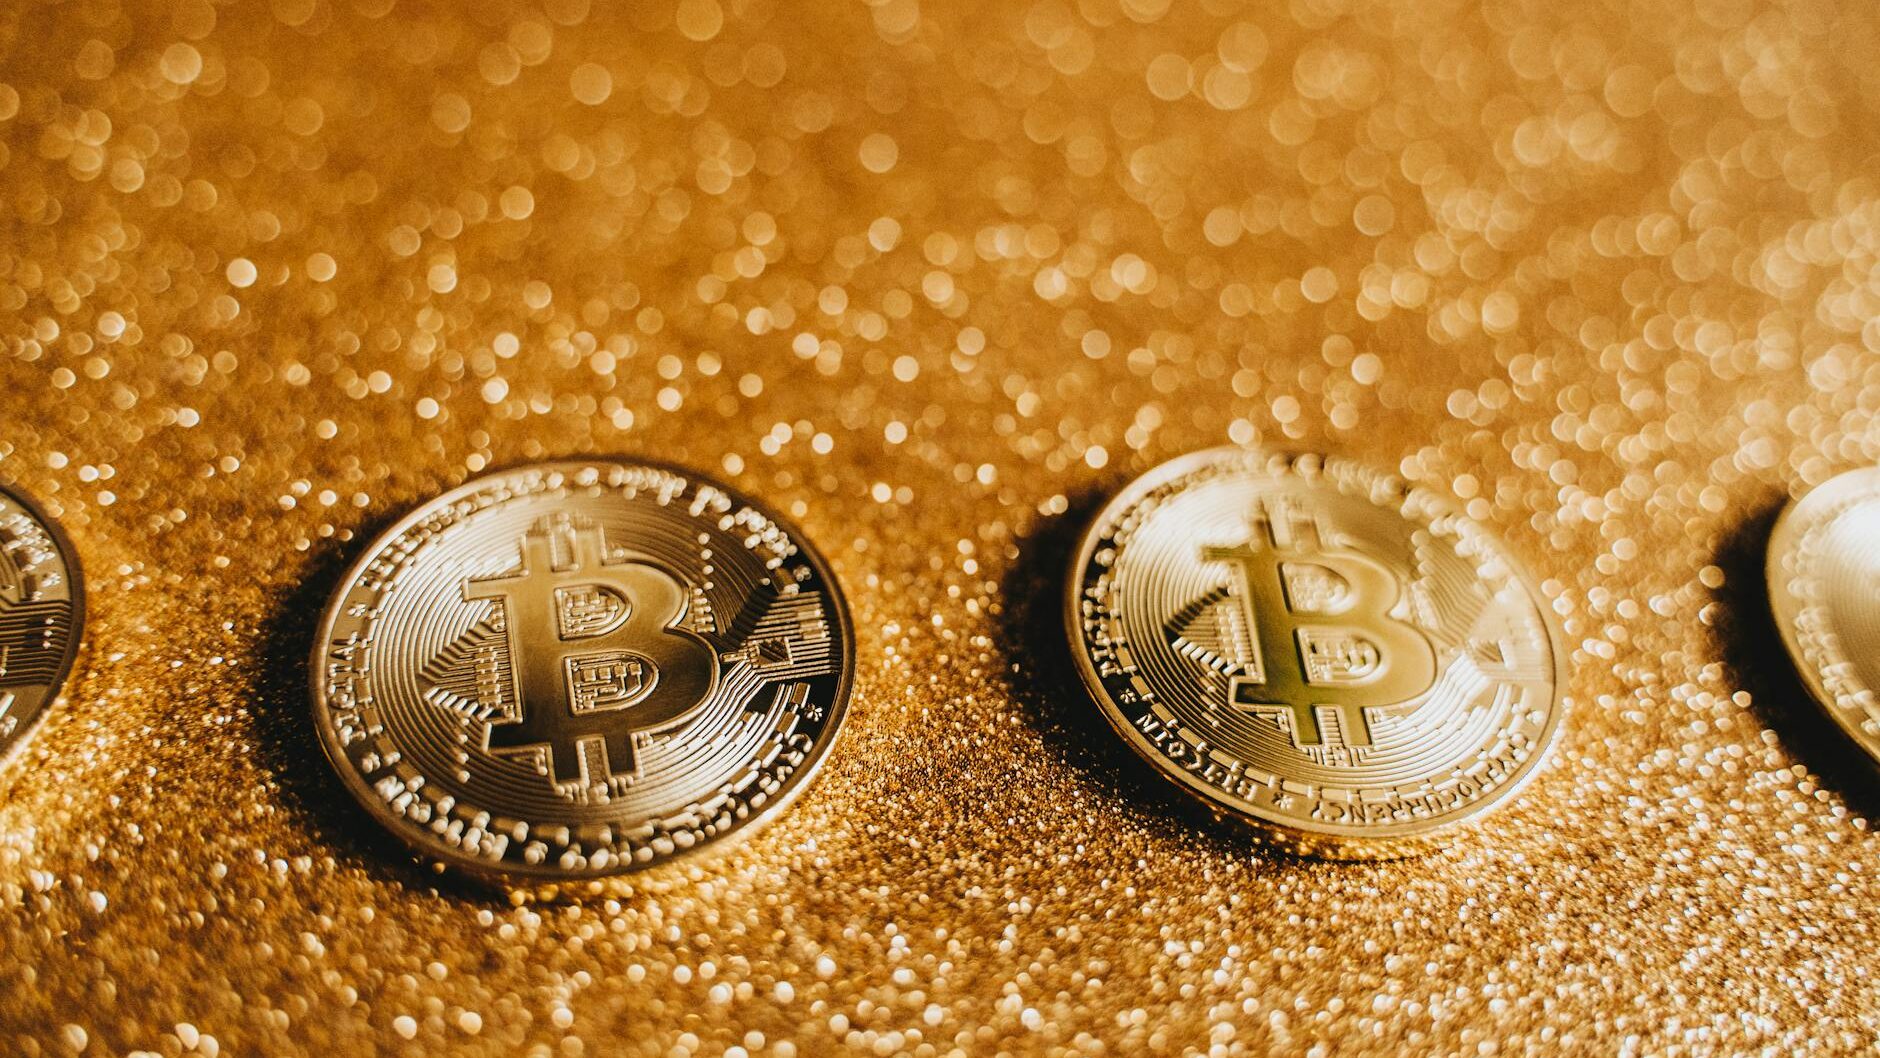 Should I Buy Bitcoin Right Now?